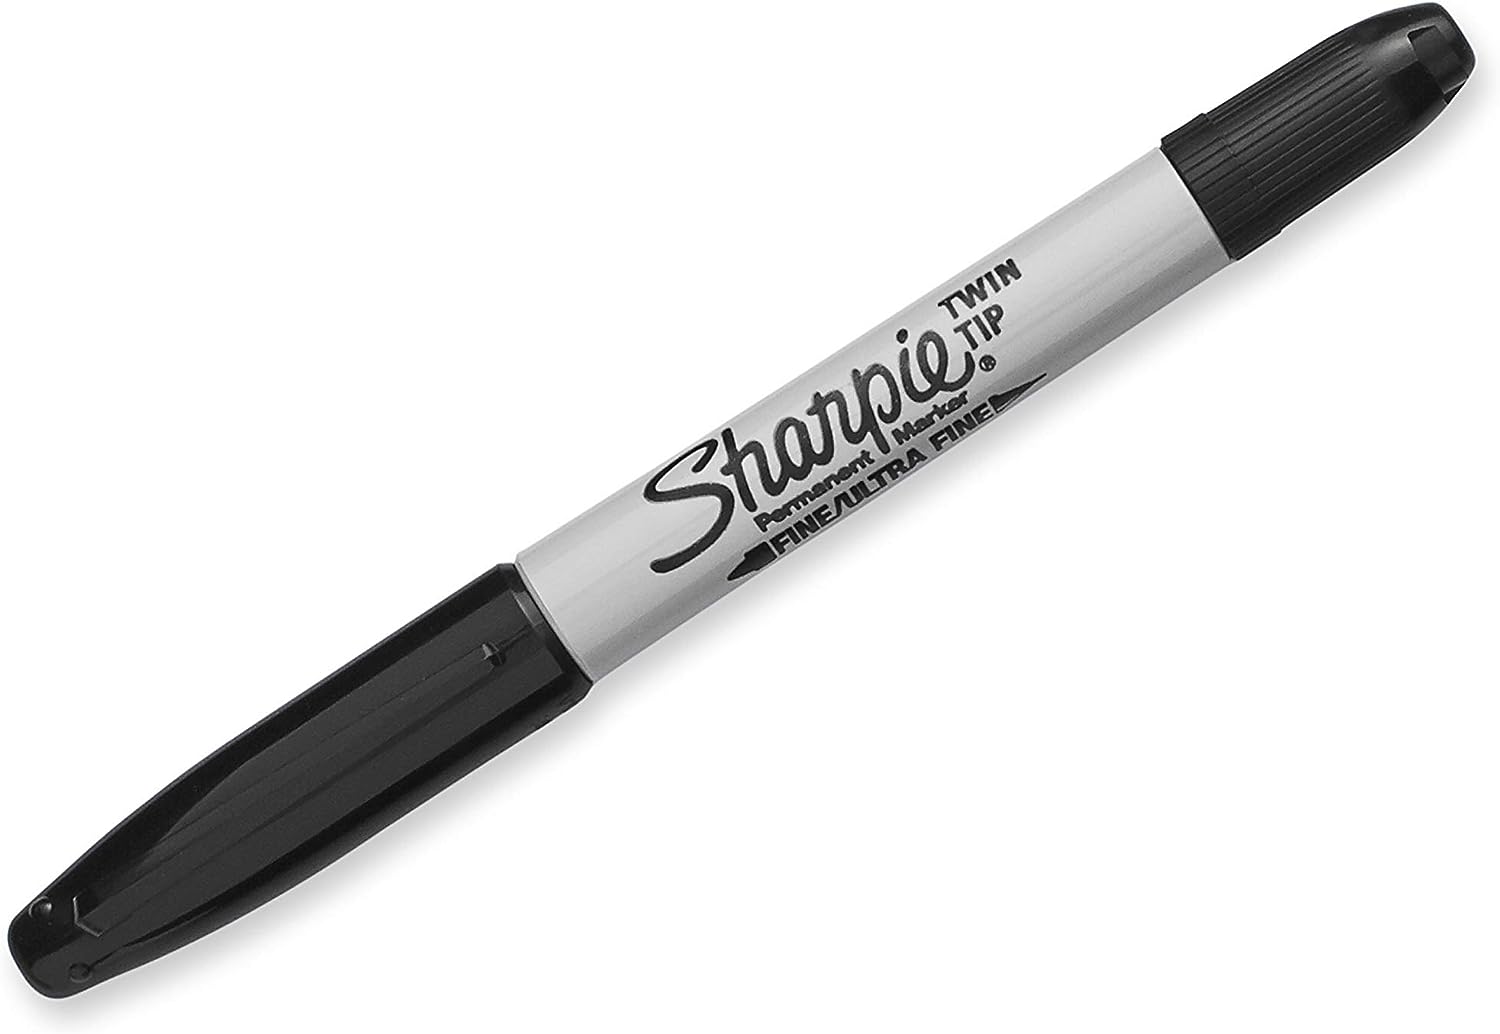 Sharpie-Schwarzer Permanent marker - Twin-tip-Fein &amp; ultra fein kardiert